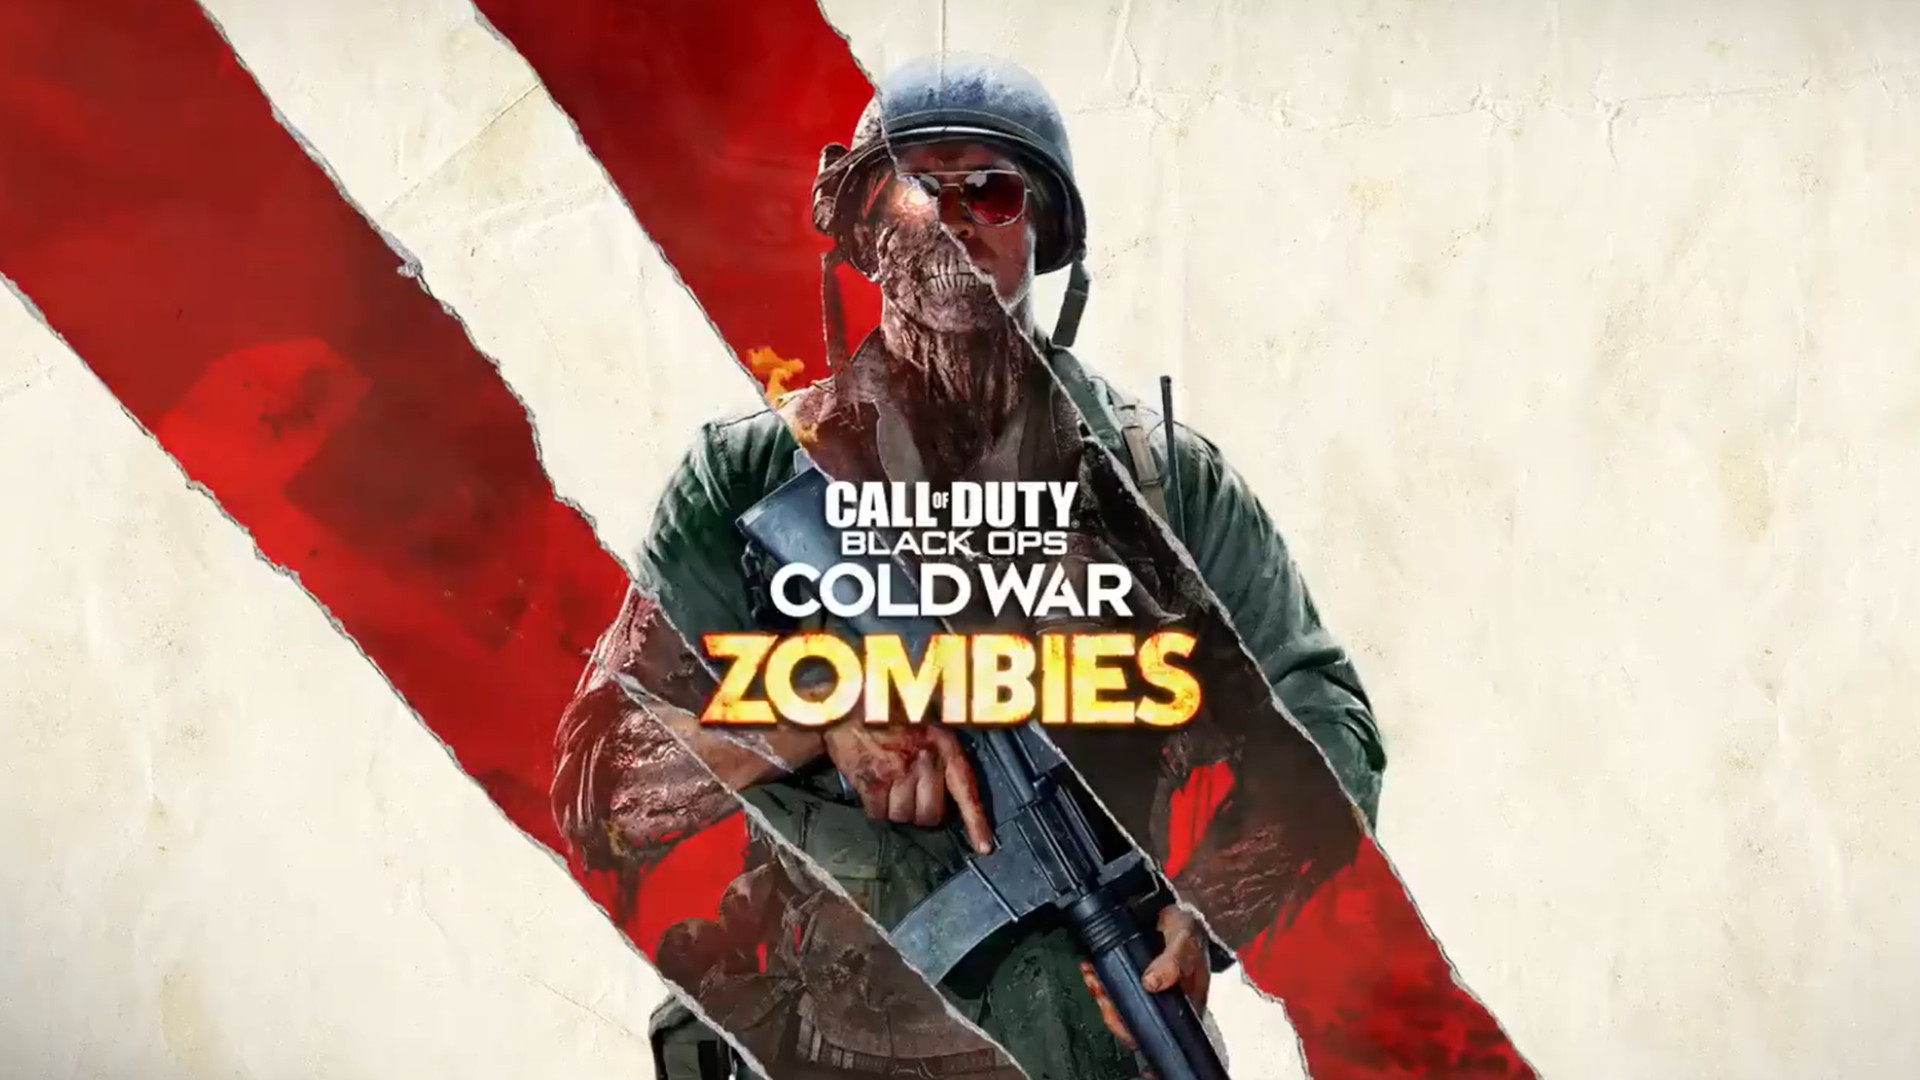 The last call of duty: black ops cold war zombies map, forsaken, kommer den 7 oktober!